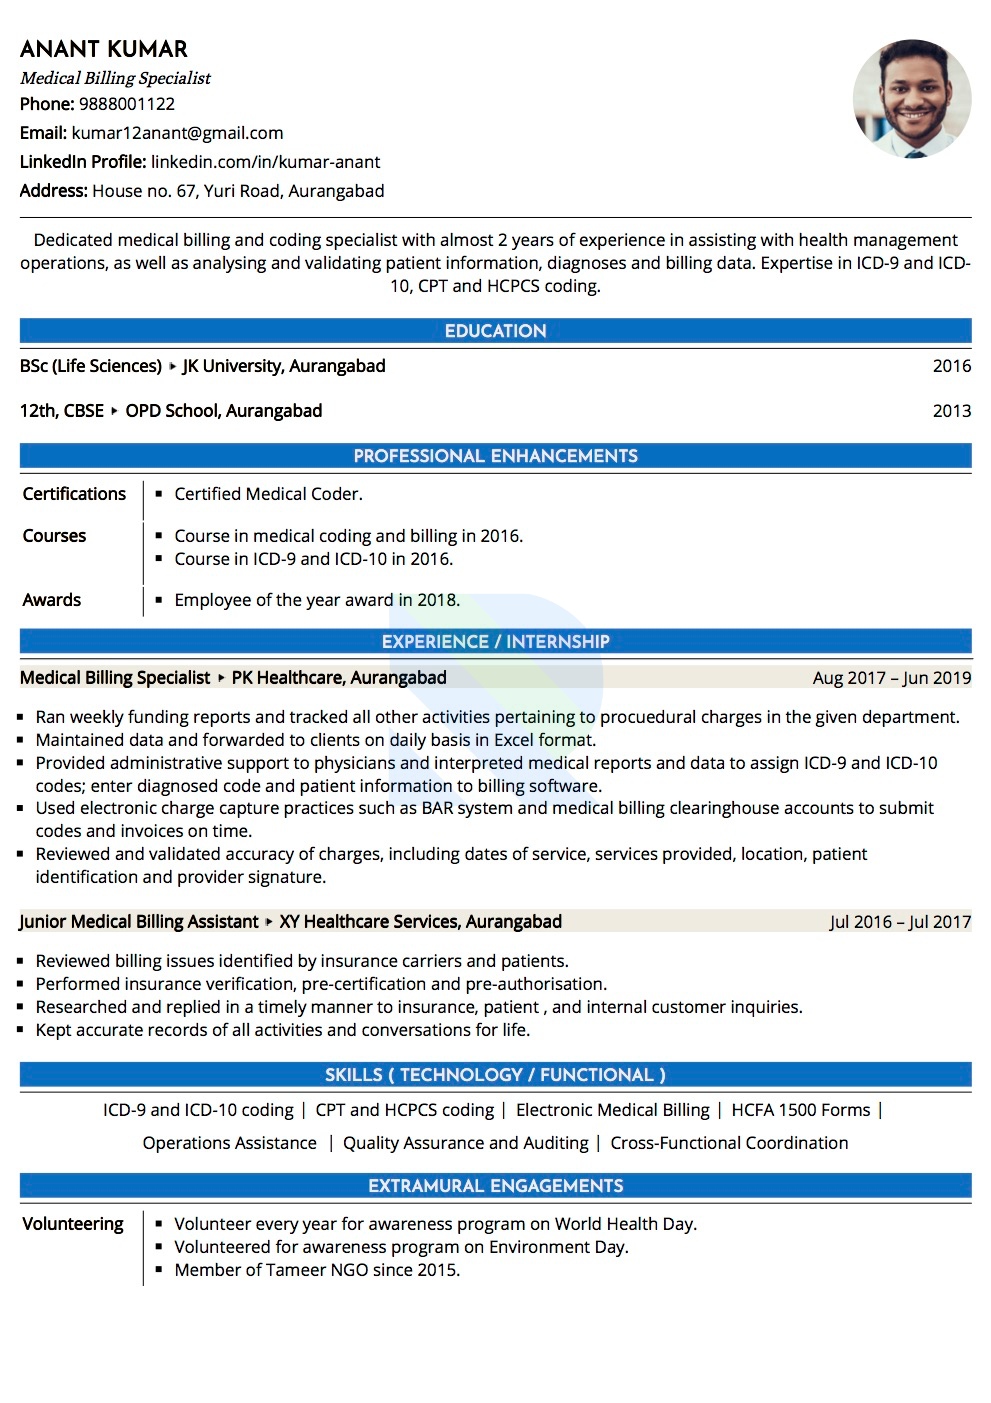 Sample Resume of Medical Billing Specialist  | Free Resume Templates & Samples on Resumod.co